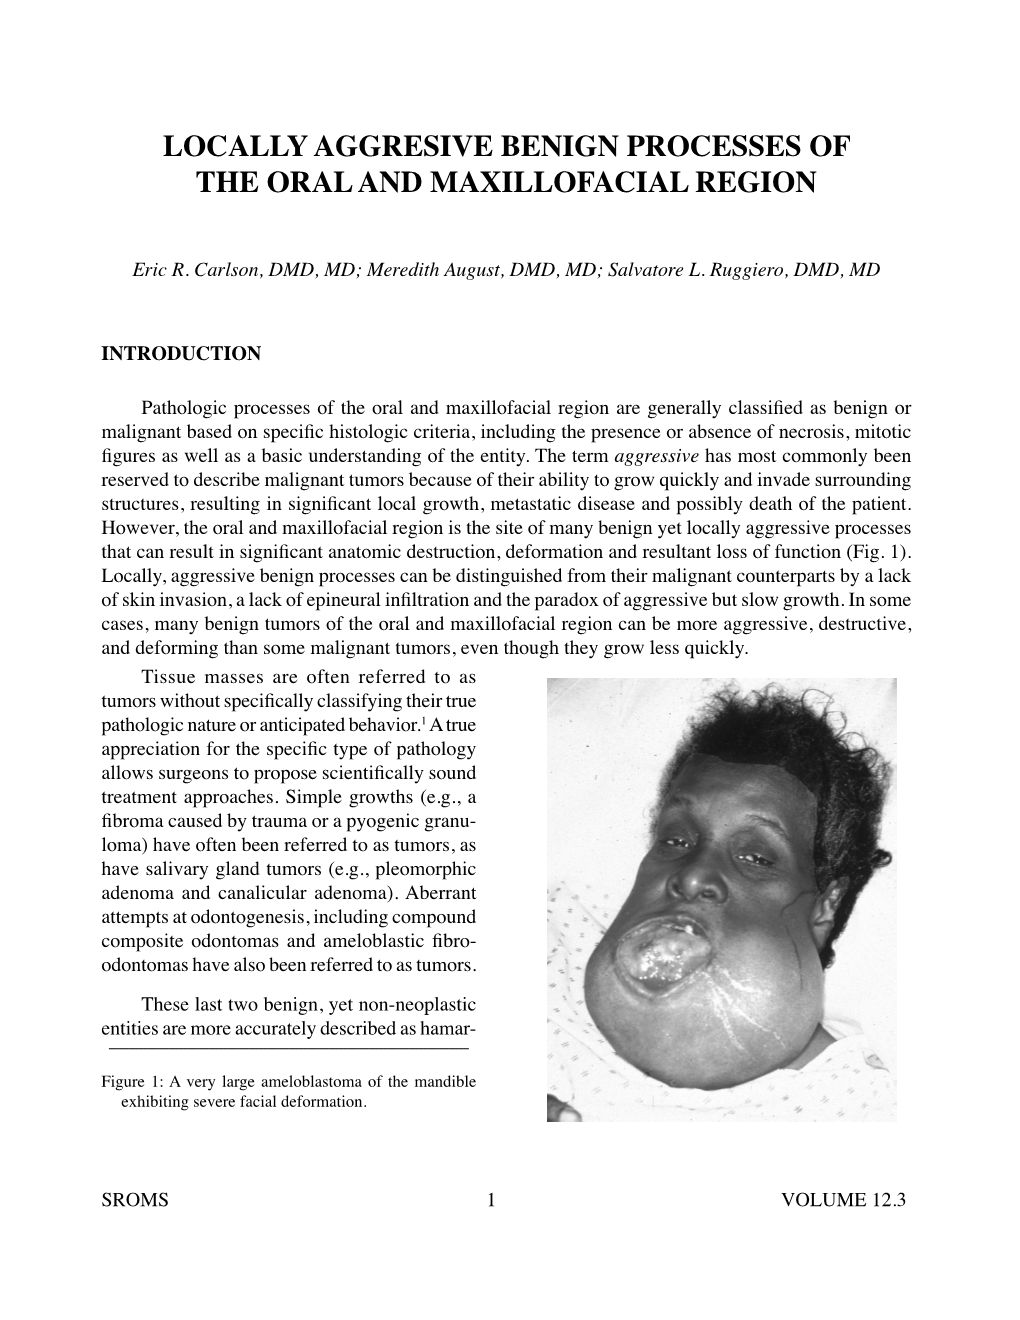 Locally Aggresive Benign Processes of the Oral and Maxillofacial Region